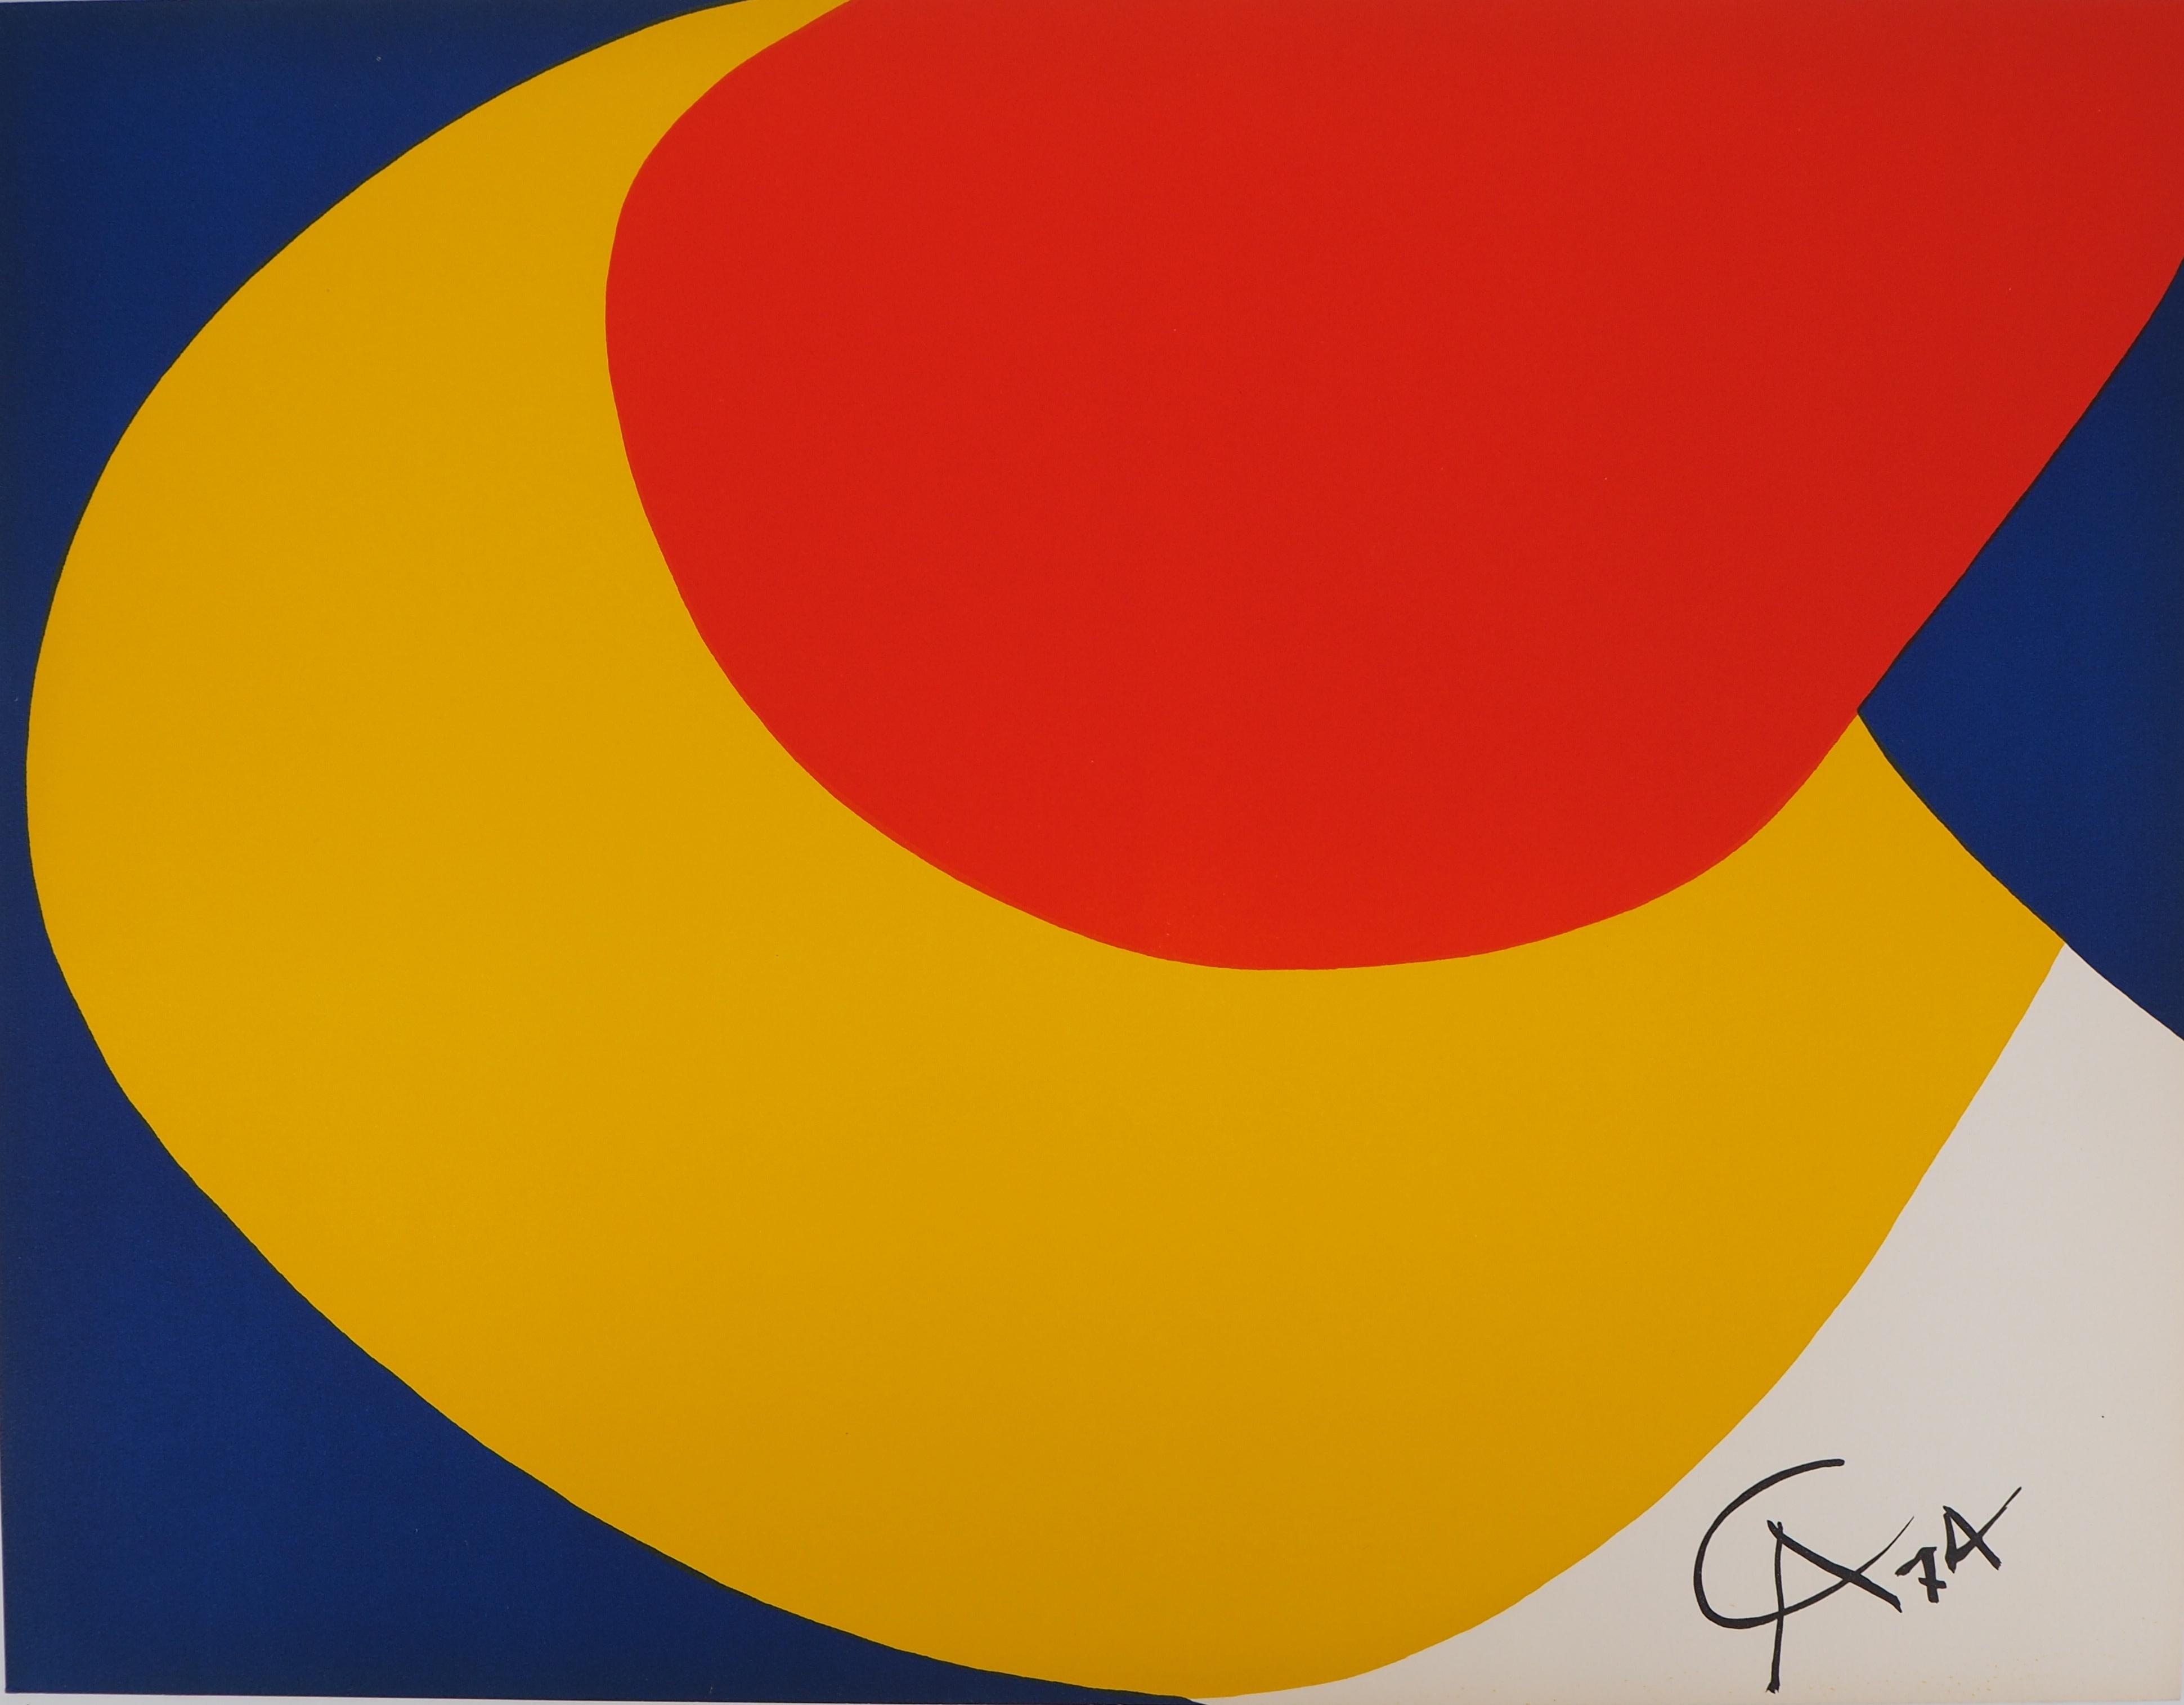 Alexander Calder Abstract Print - Yellow Crescent - Original lithograph, 1974